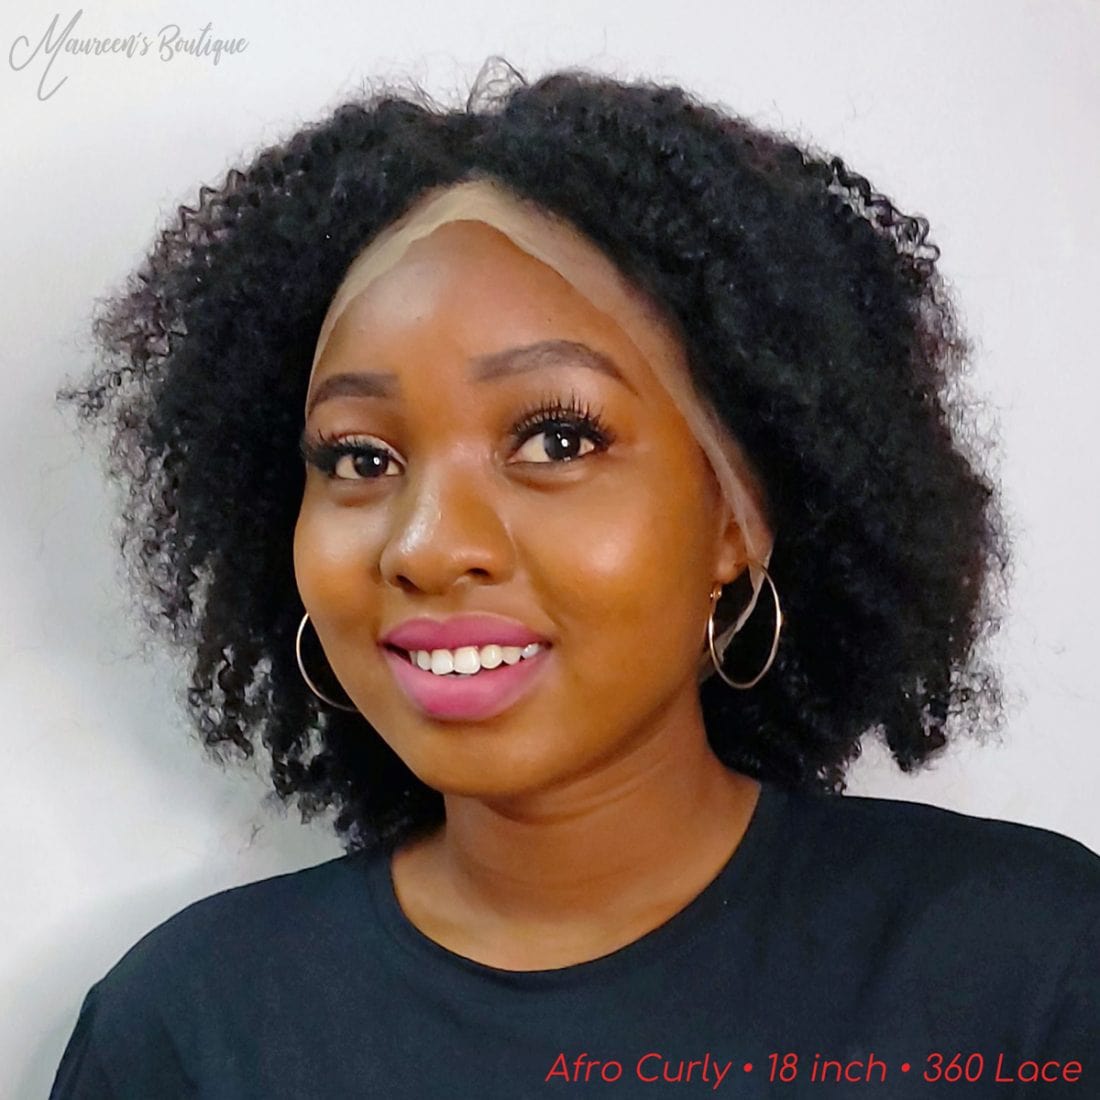 maureens.com Afro Curly human hair wig 18 inch 360 1